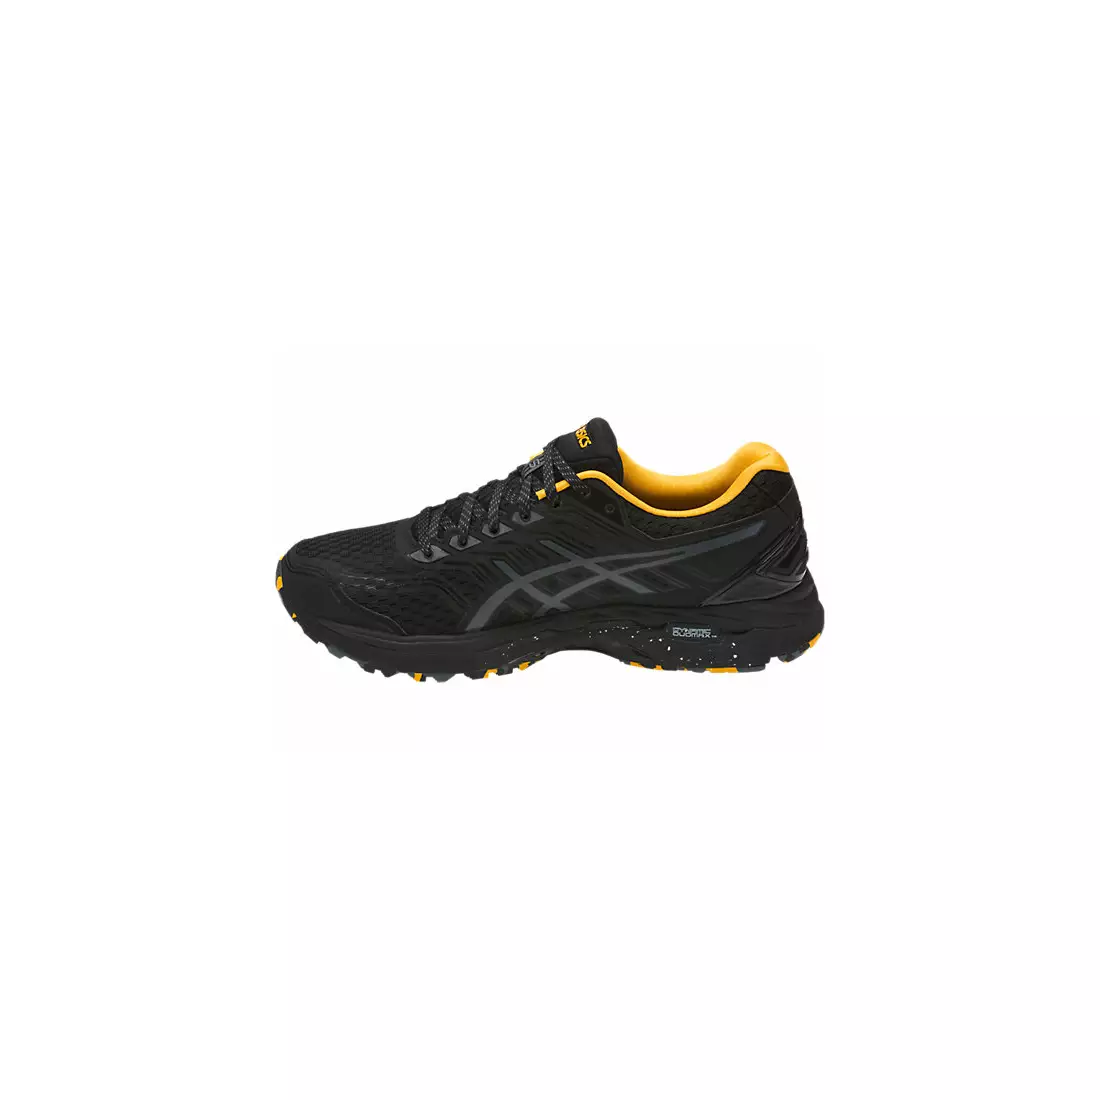 ASICS GT-2000 5 TRAIL PlasmaGuard men's running shoes T7H4N 9097